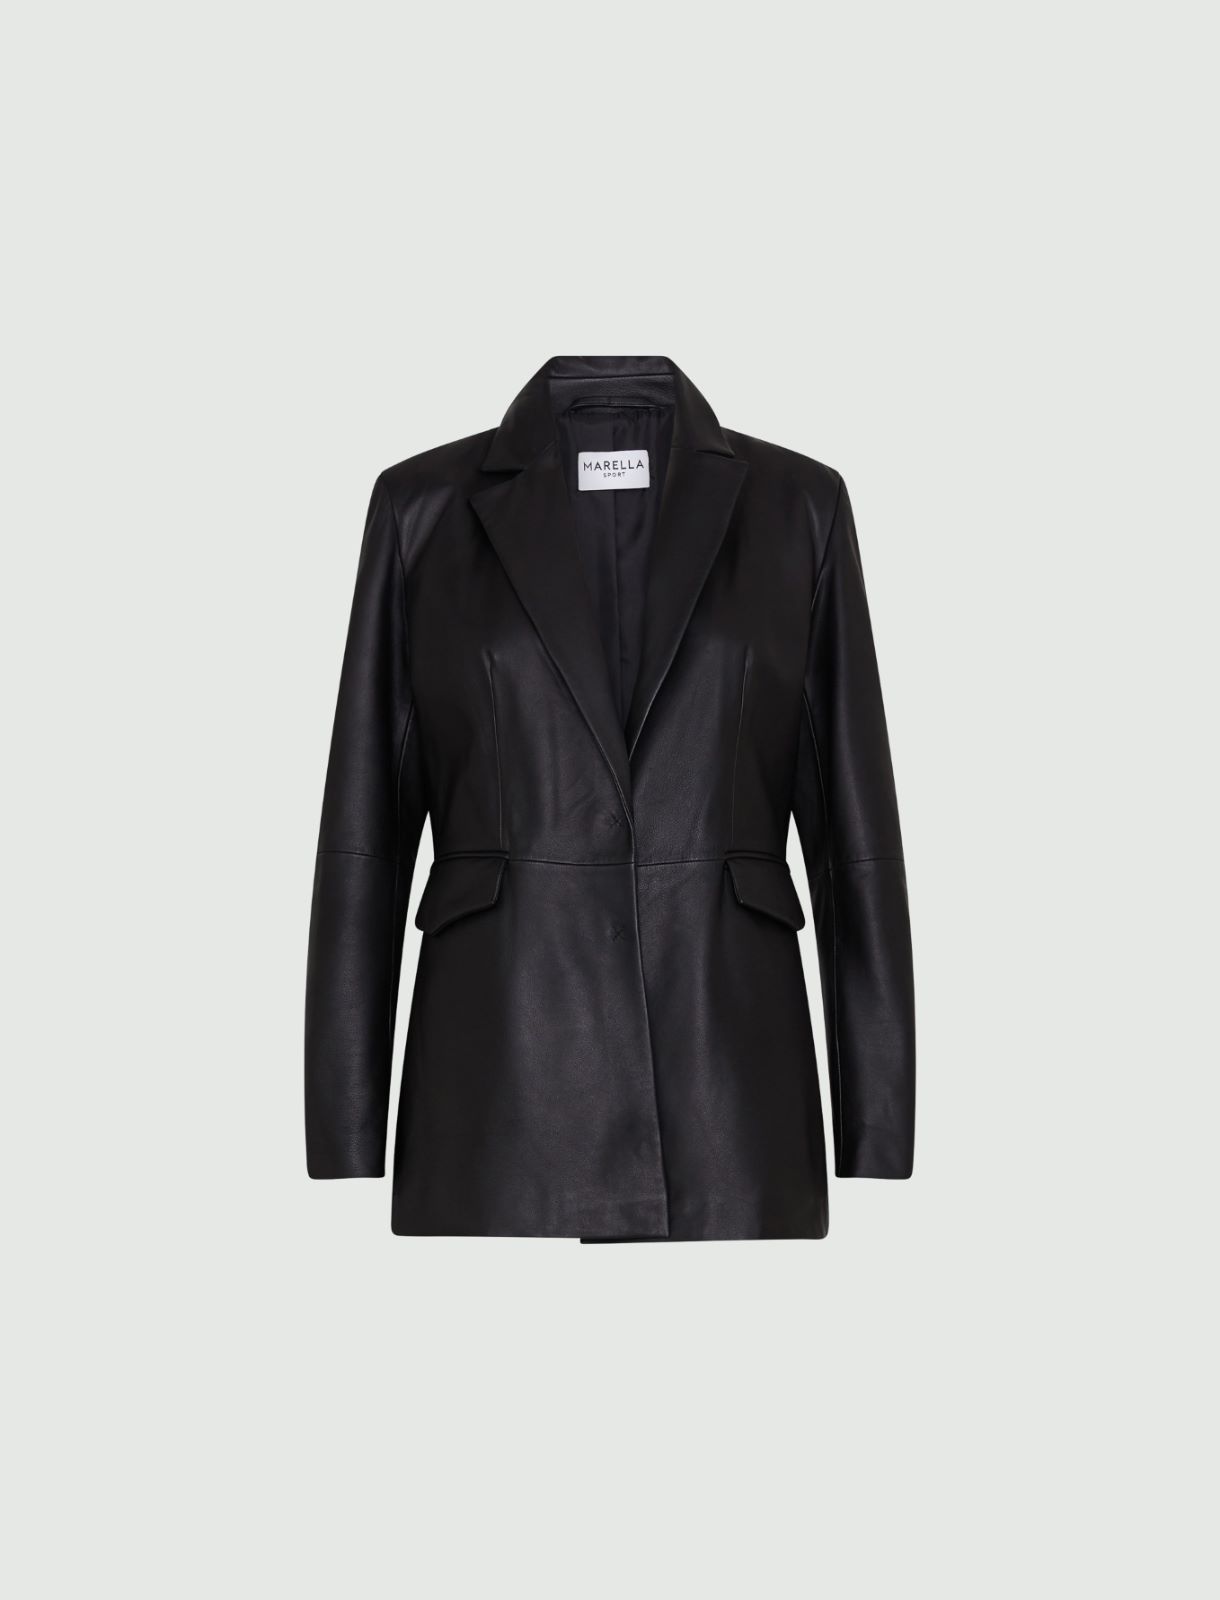 Leather blazer - Black - Marella - 5